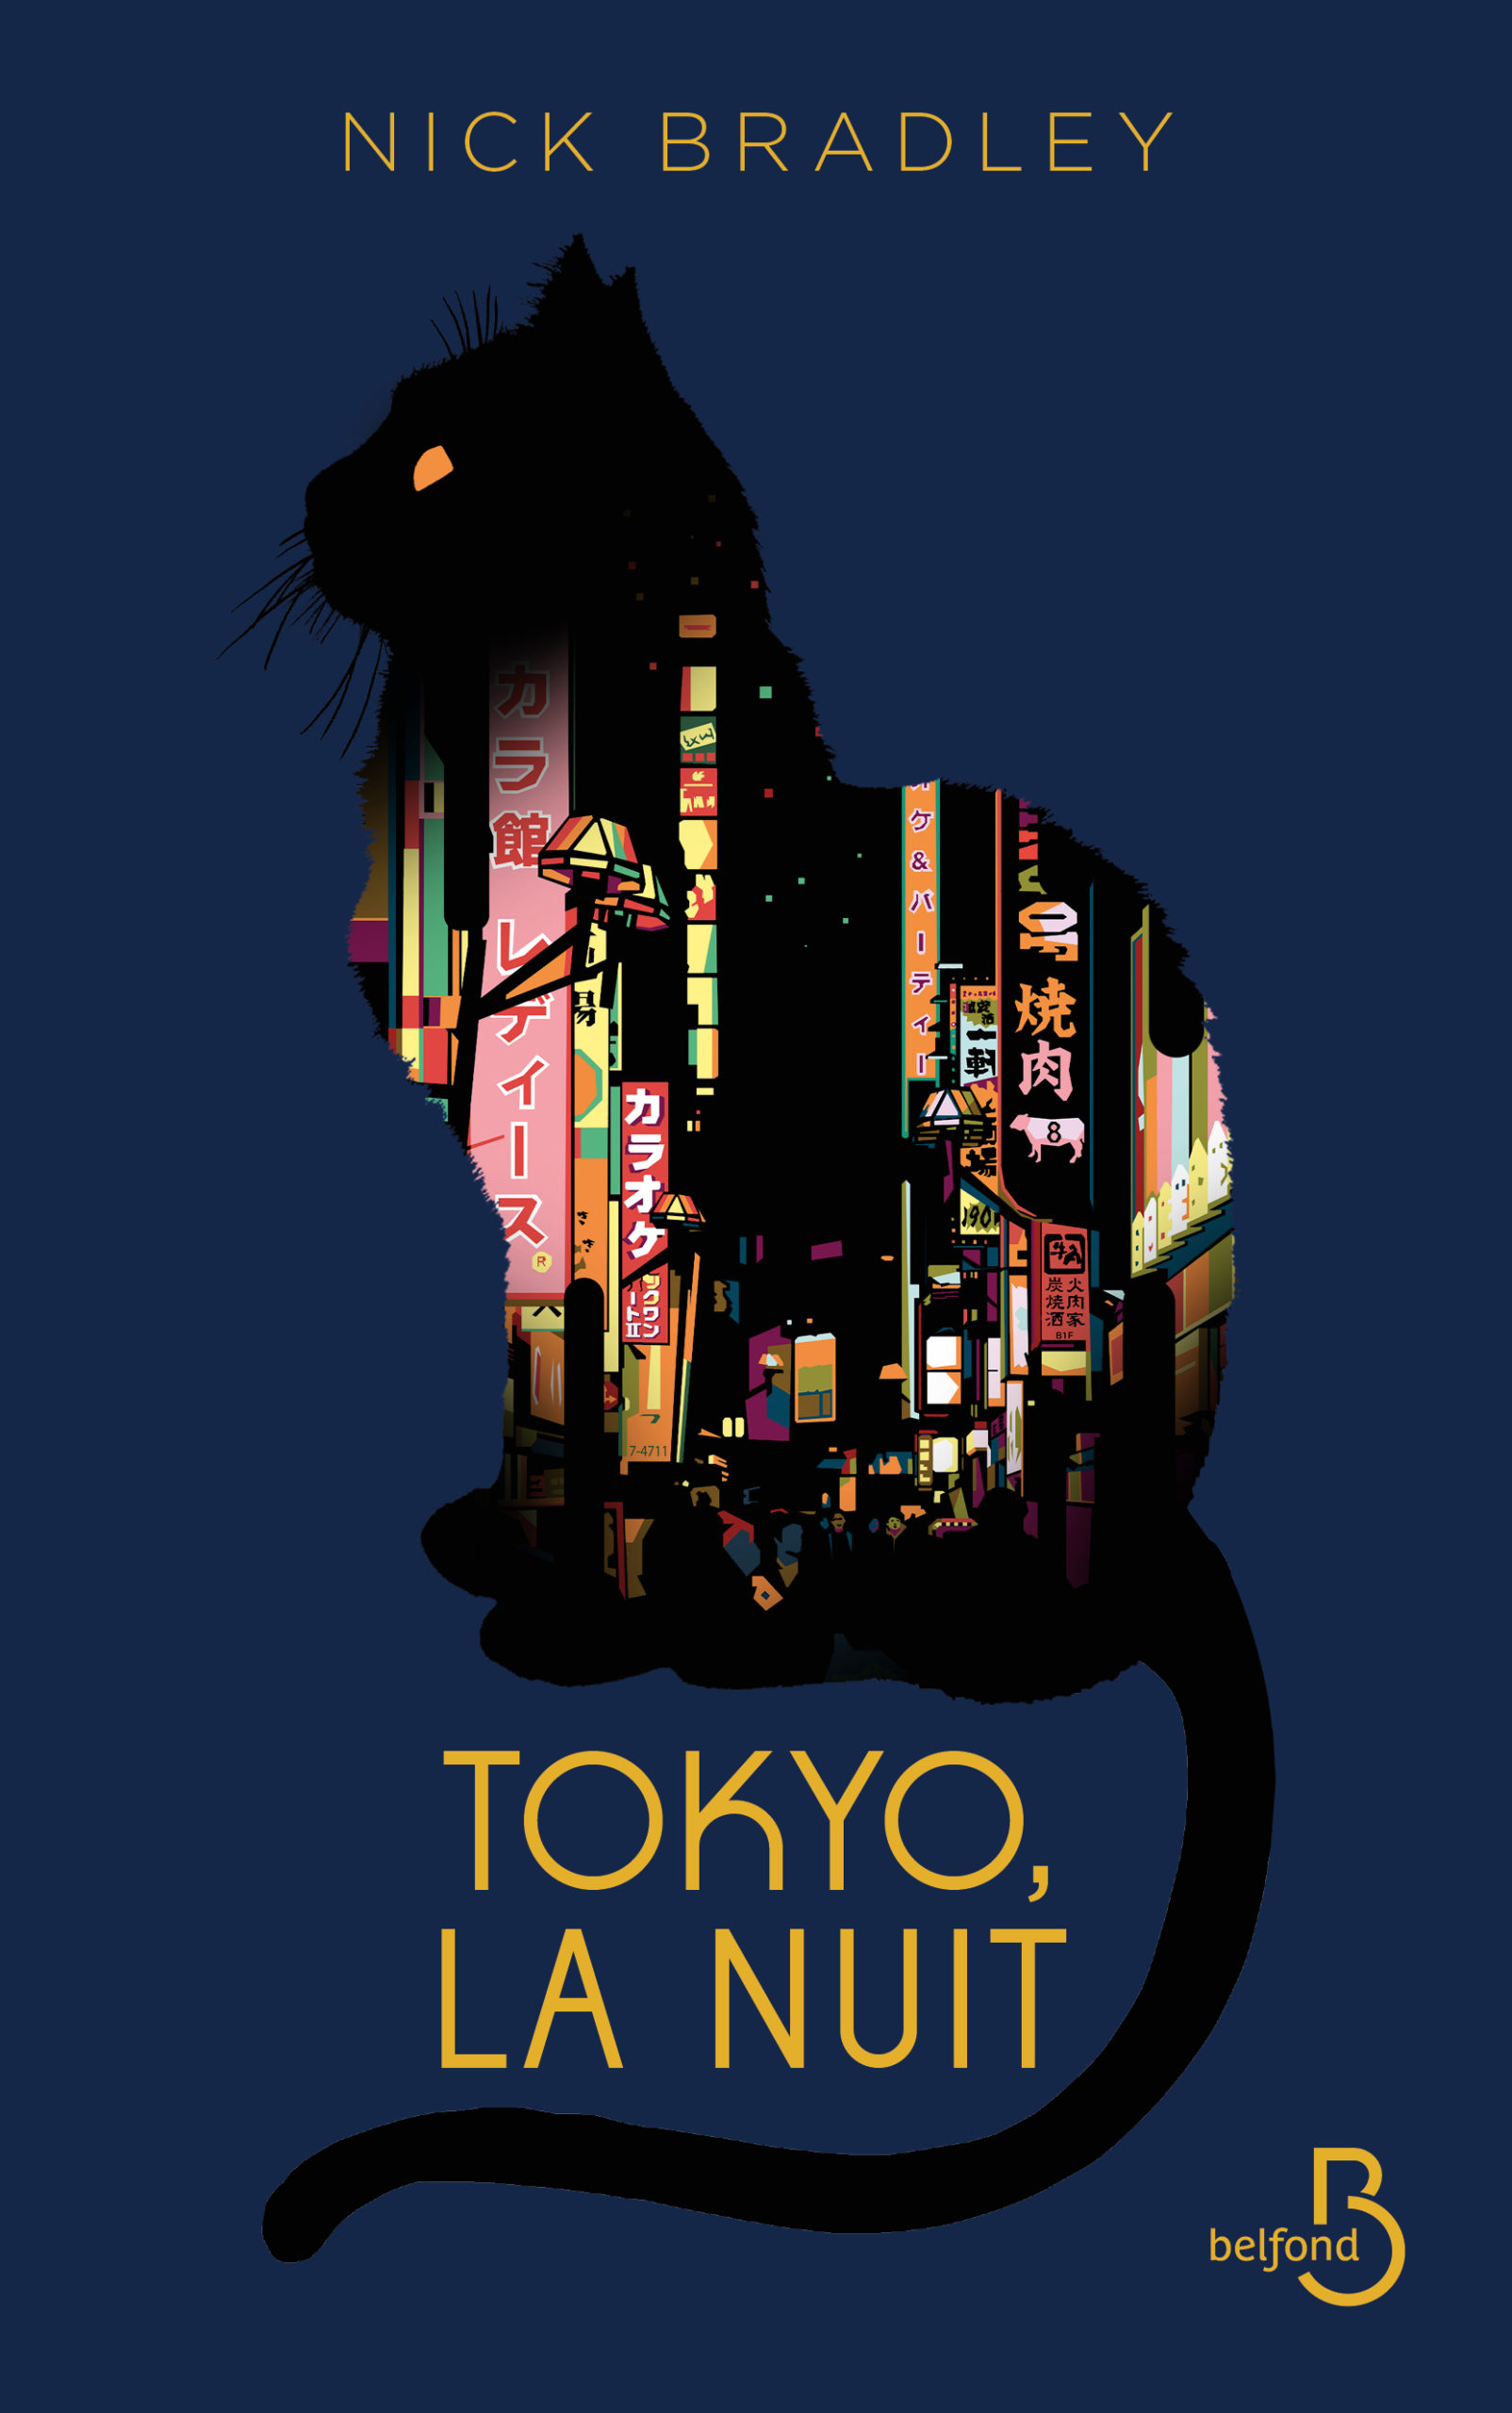 Tokyo, la nuit de Nick Bradley paraît chez Belfond.